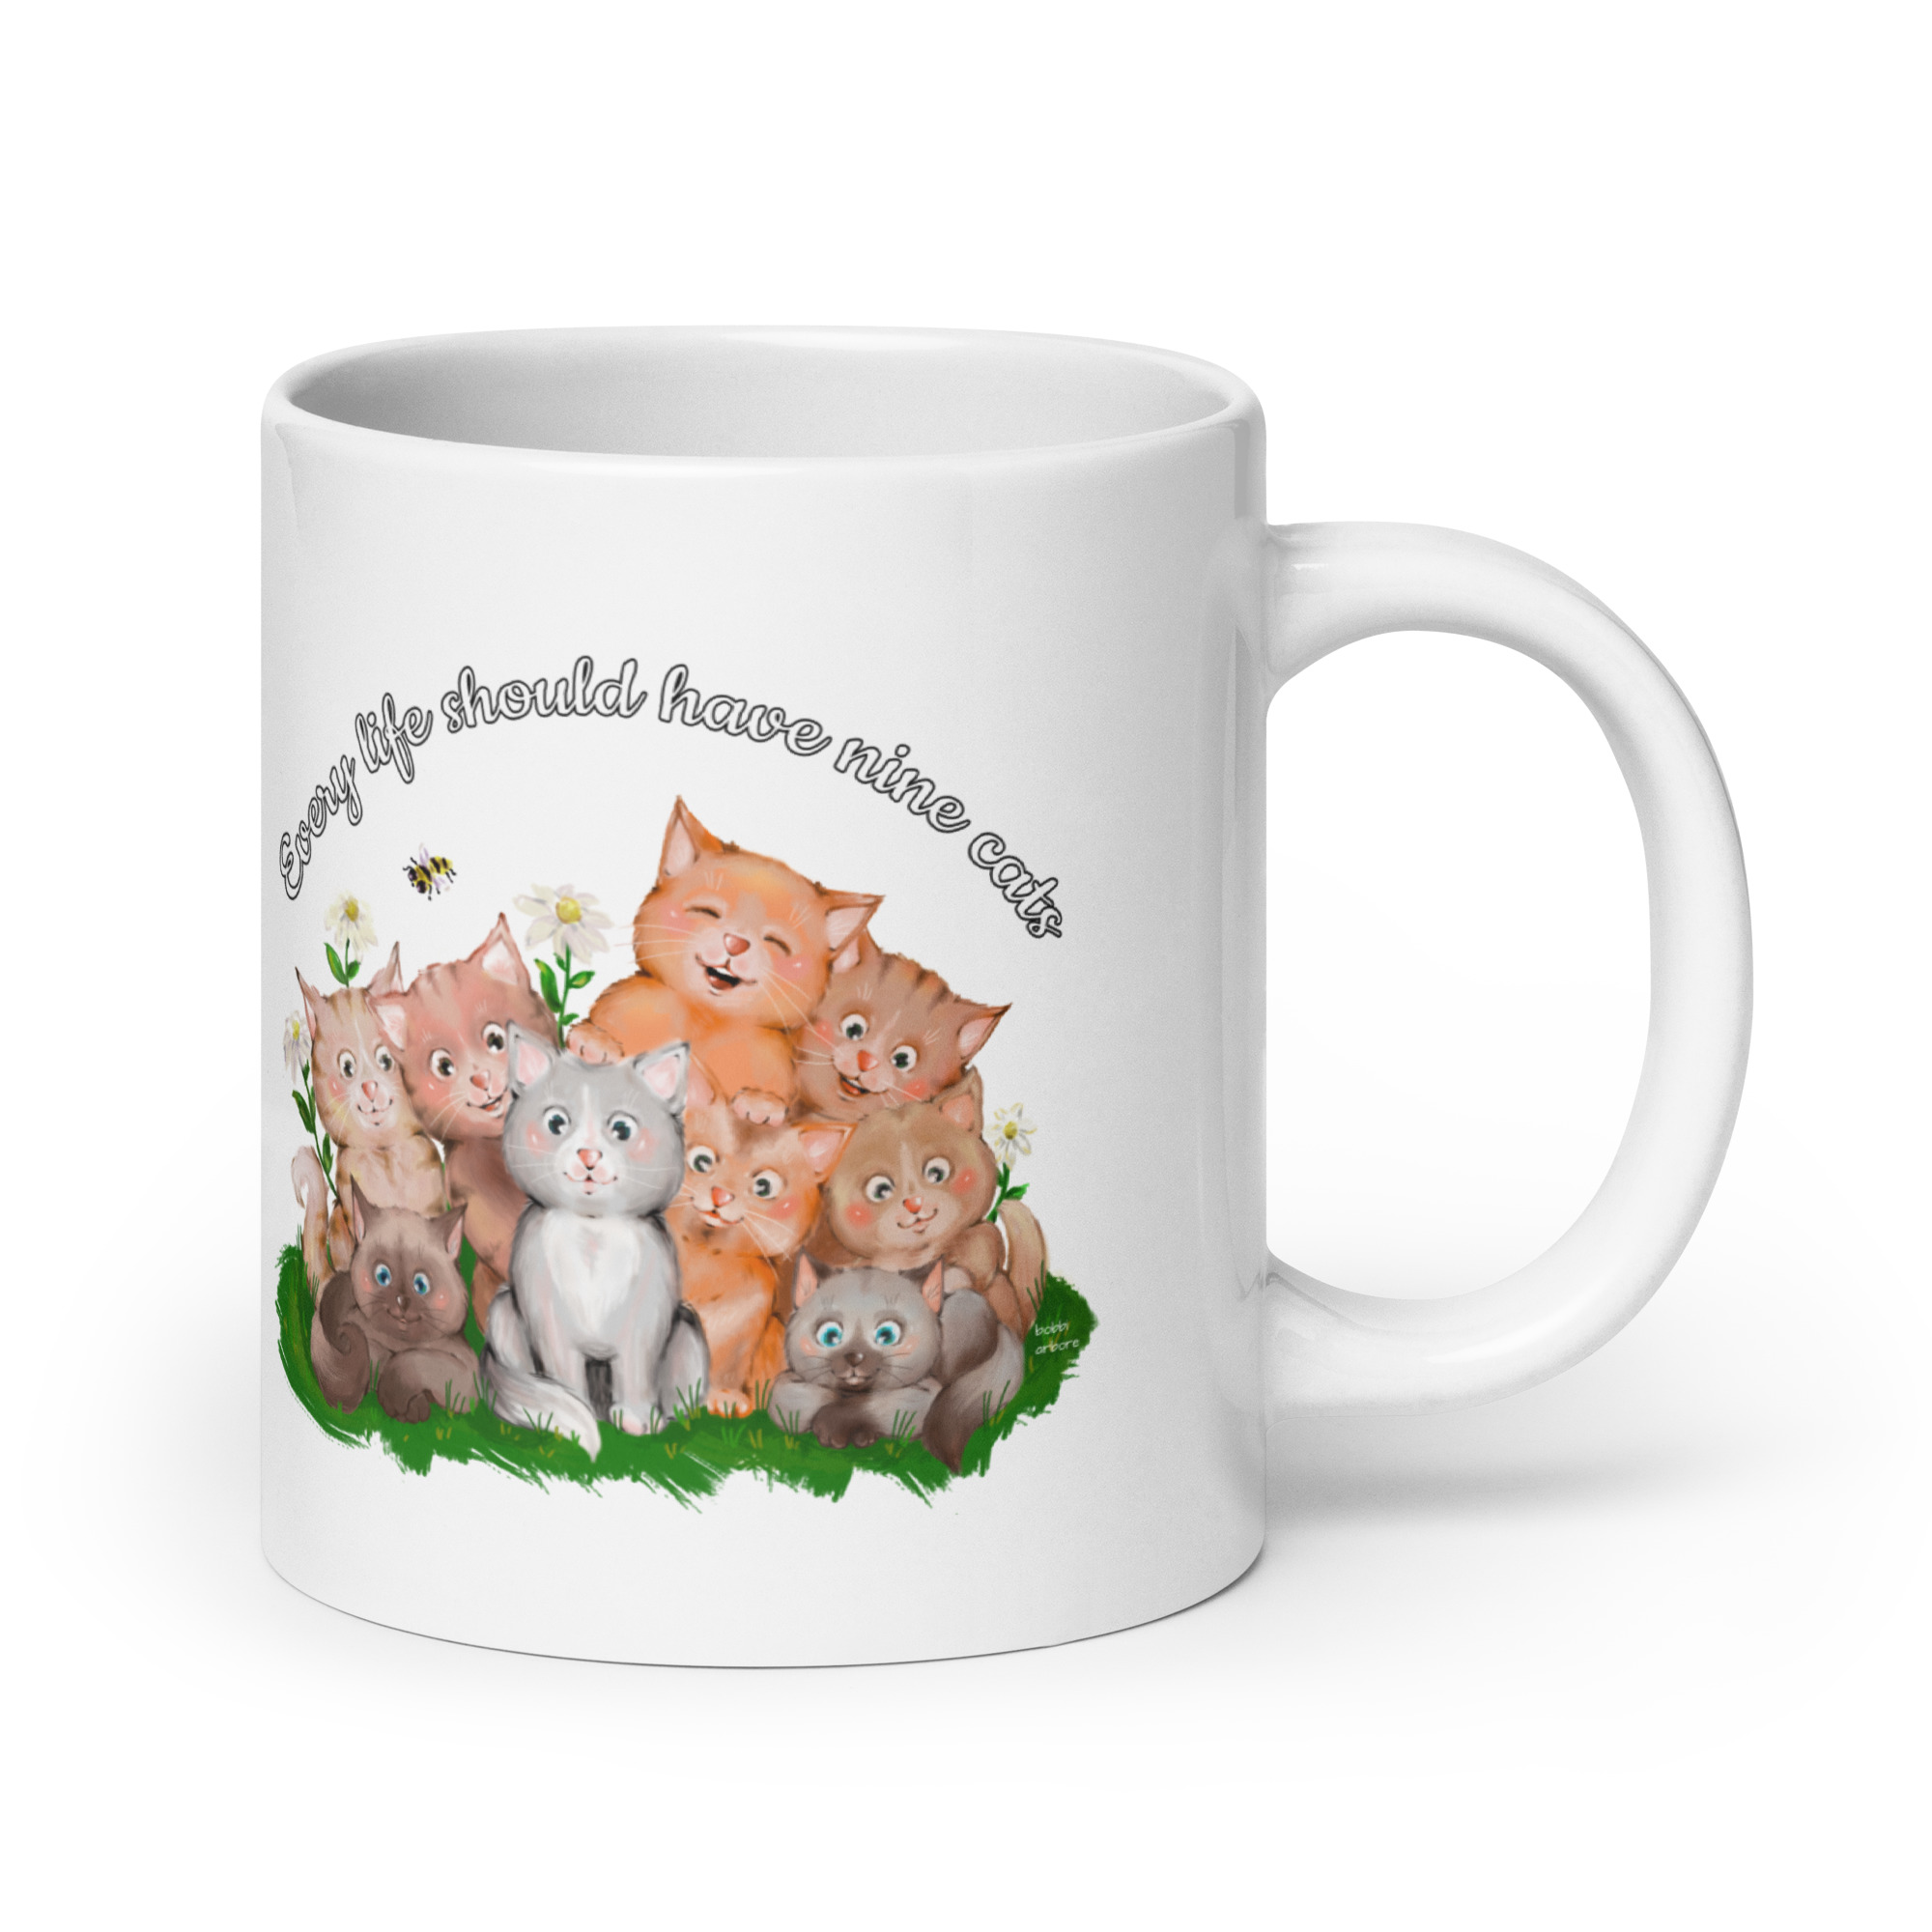 Every life hould have nine cats mug